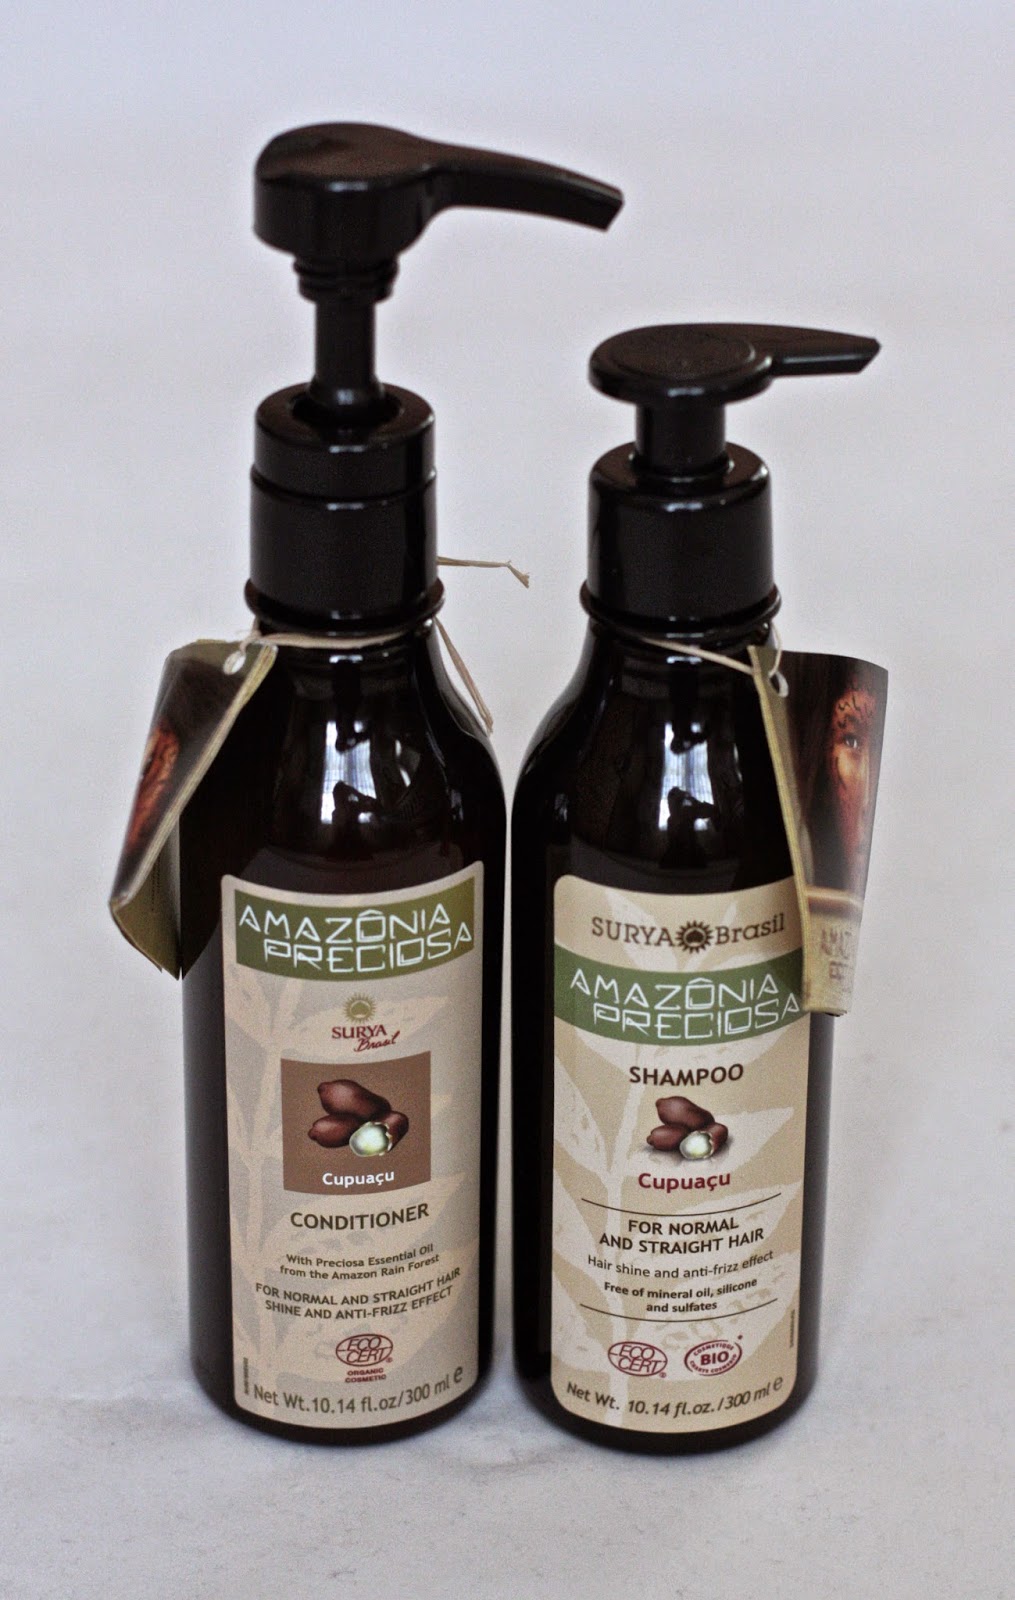 Surya Brasil Amazonia Preciosa Shampoo & Conditioner Review